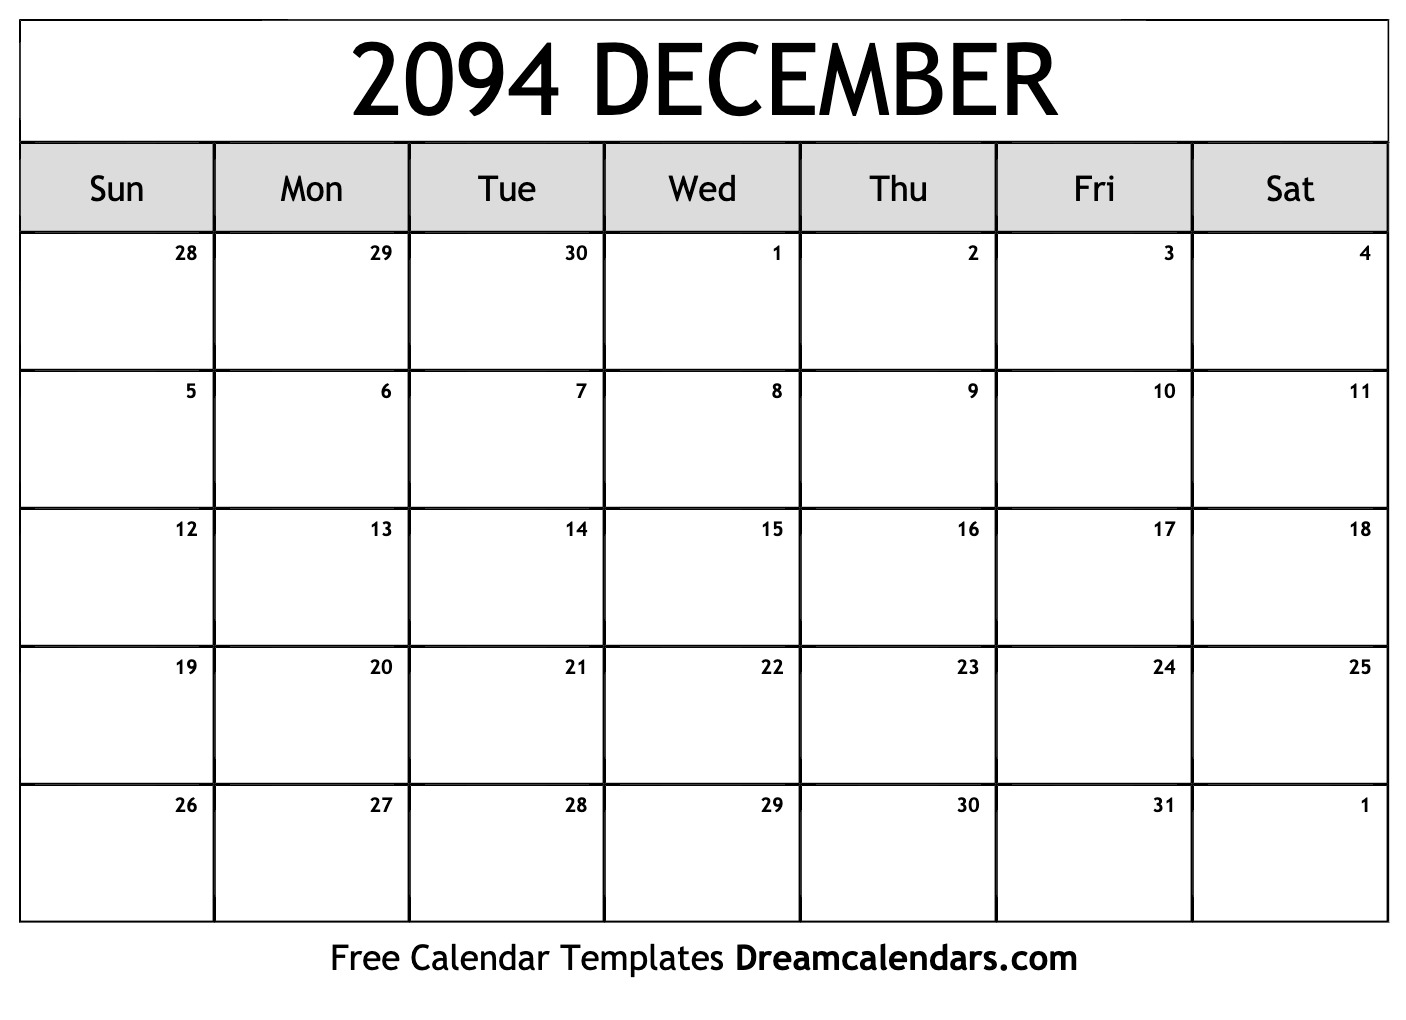 December 2094 calendar Free blank printable with holidays